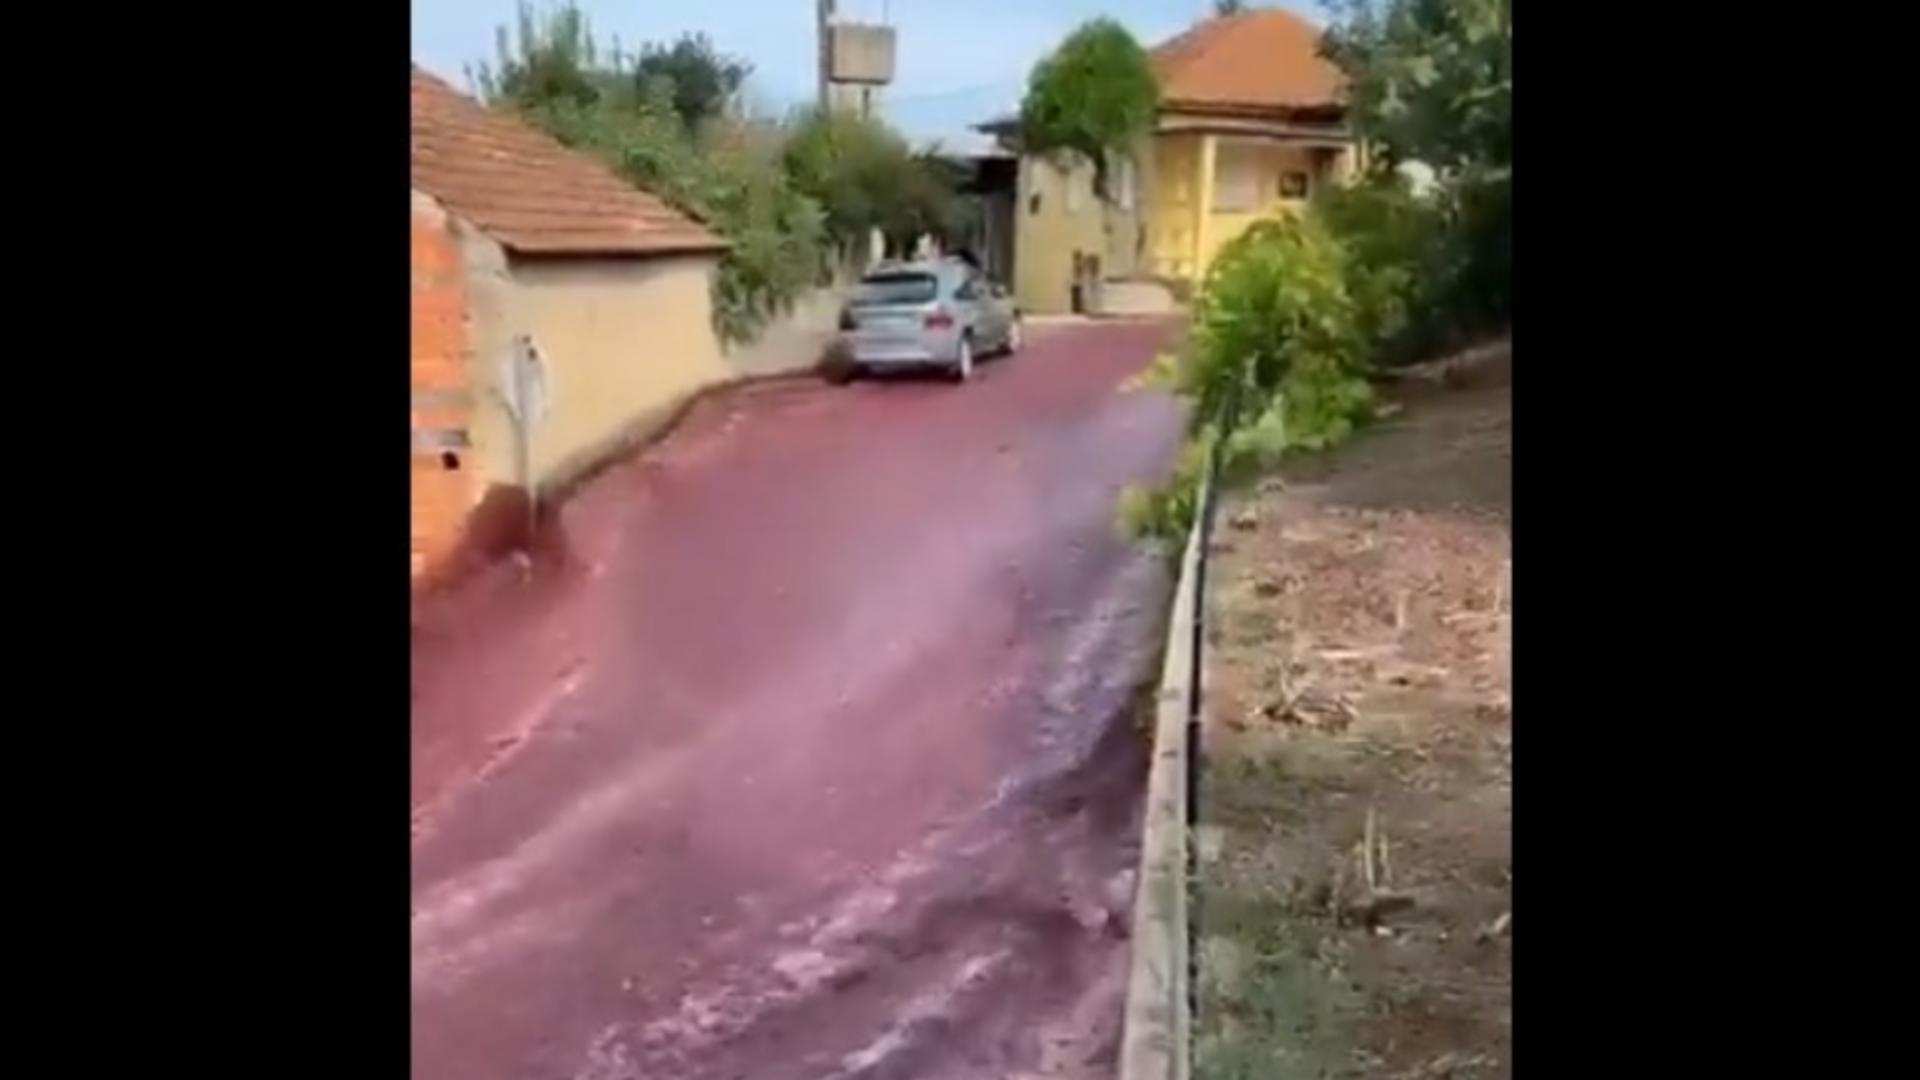 Sat inundat de vin rosu